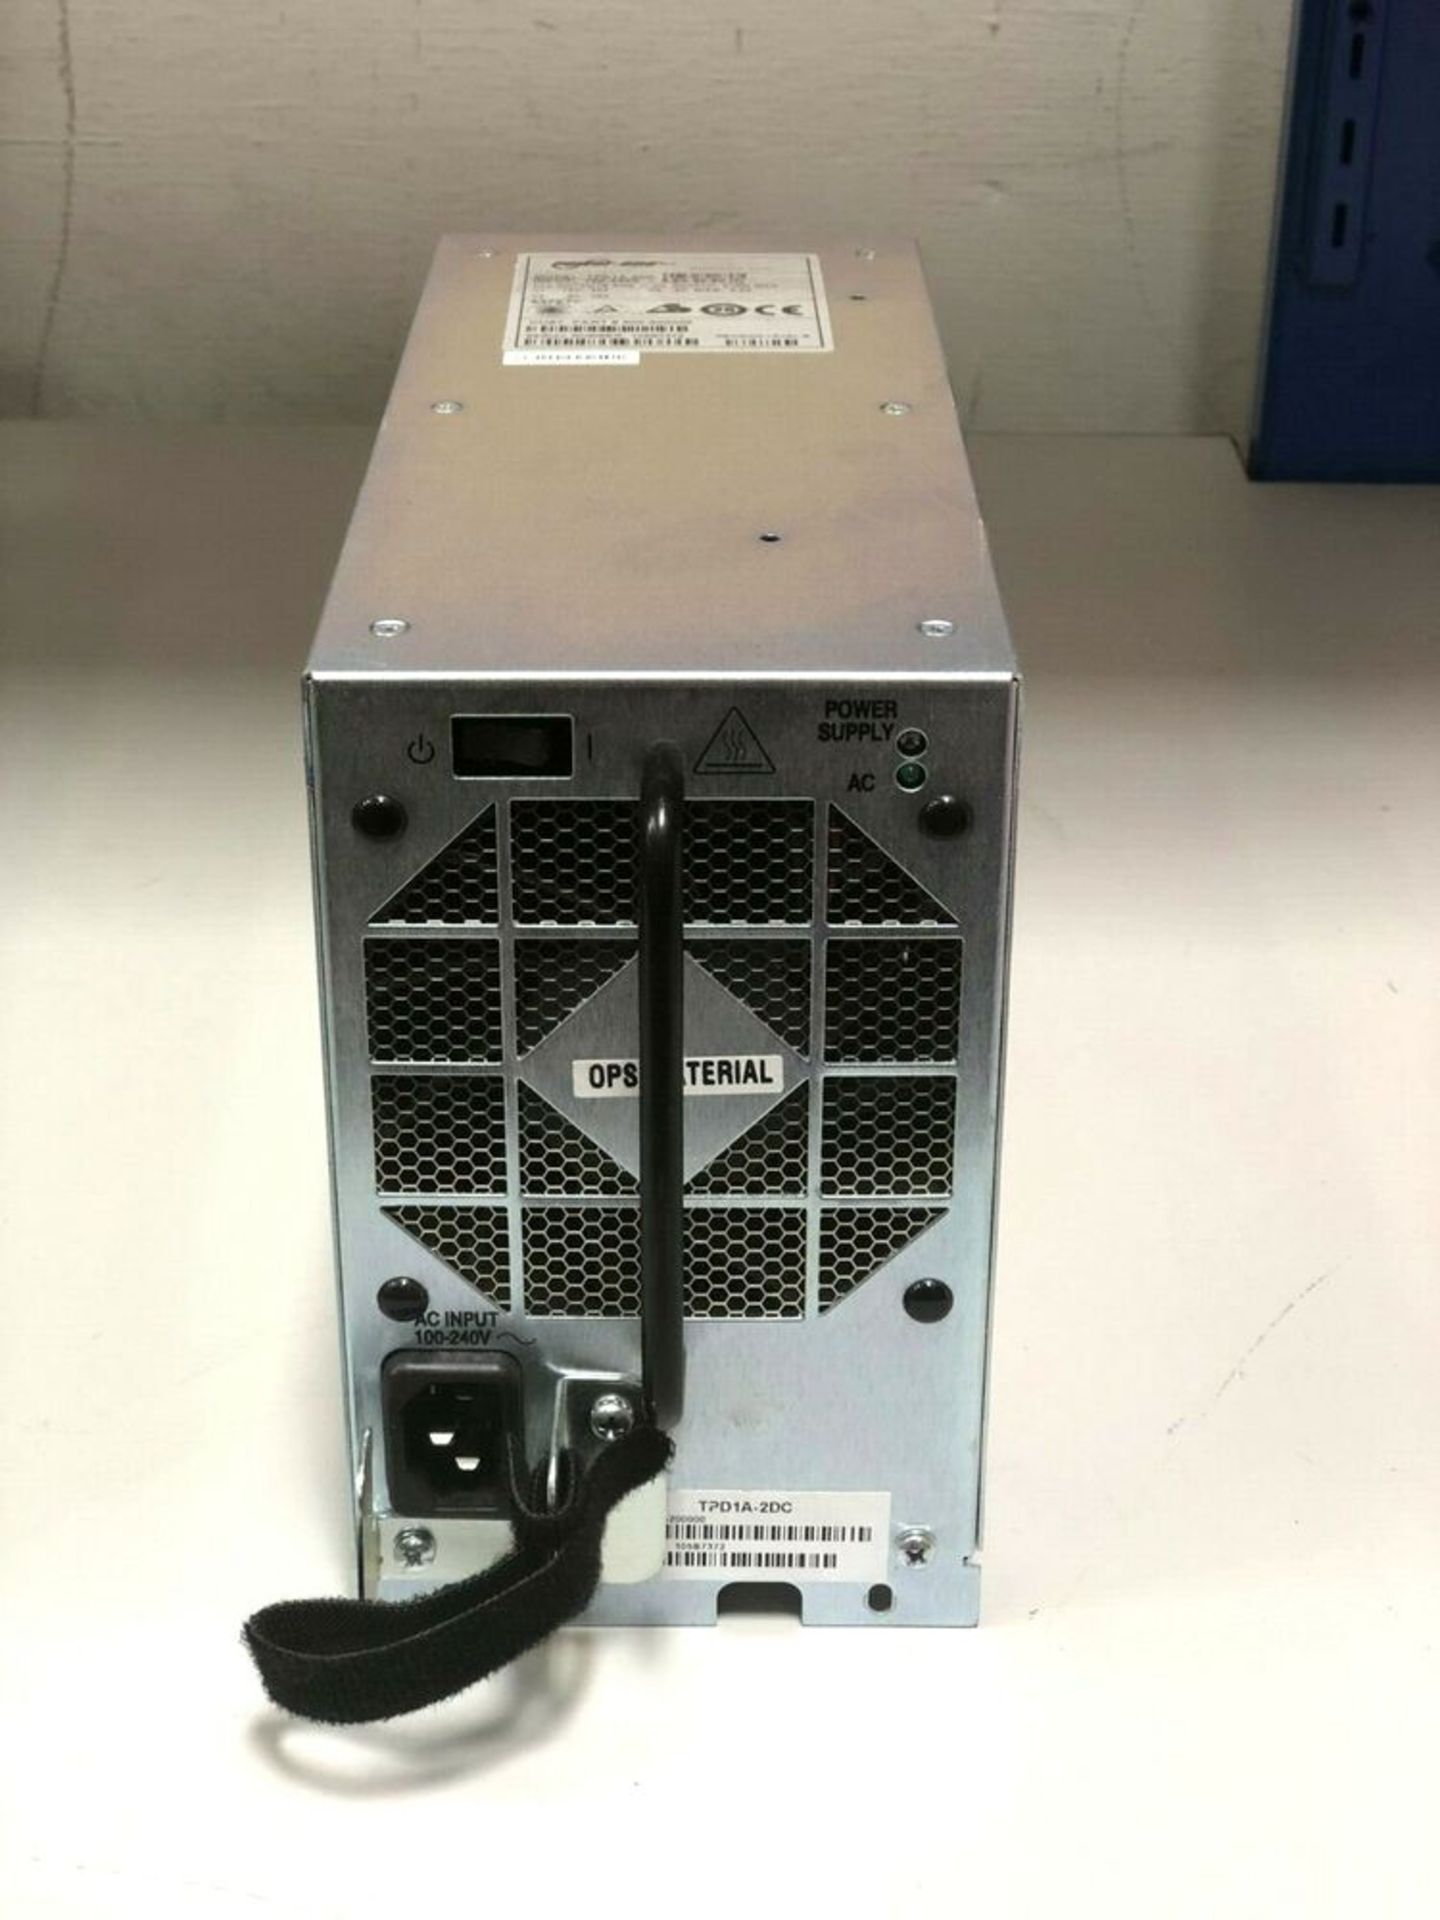 Power-One TPD1A-2DC 510W Power Supply P/N 800-0017-50 3Par